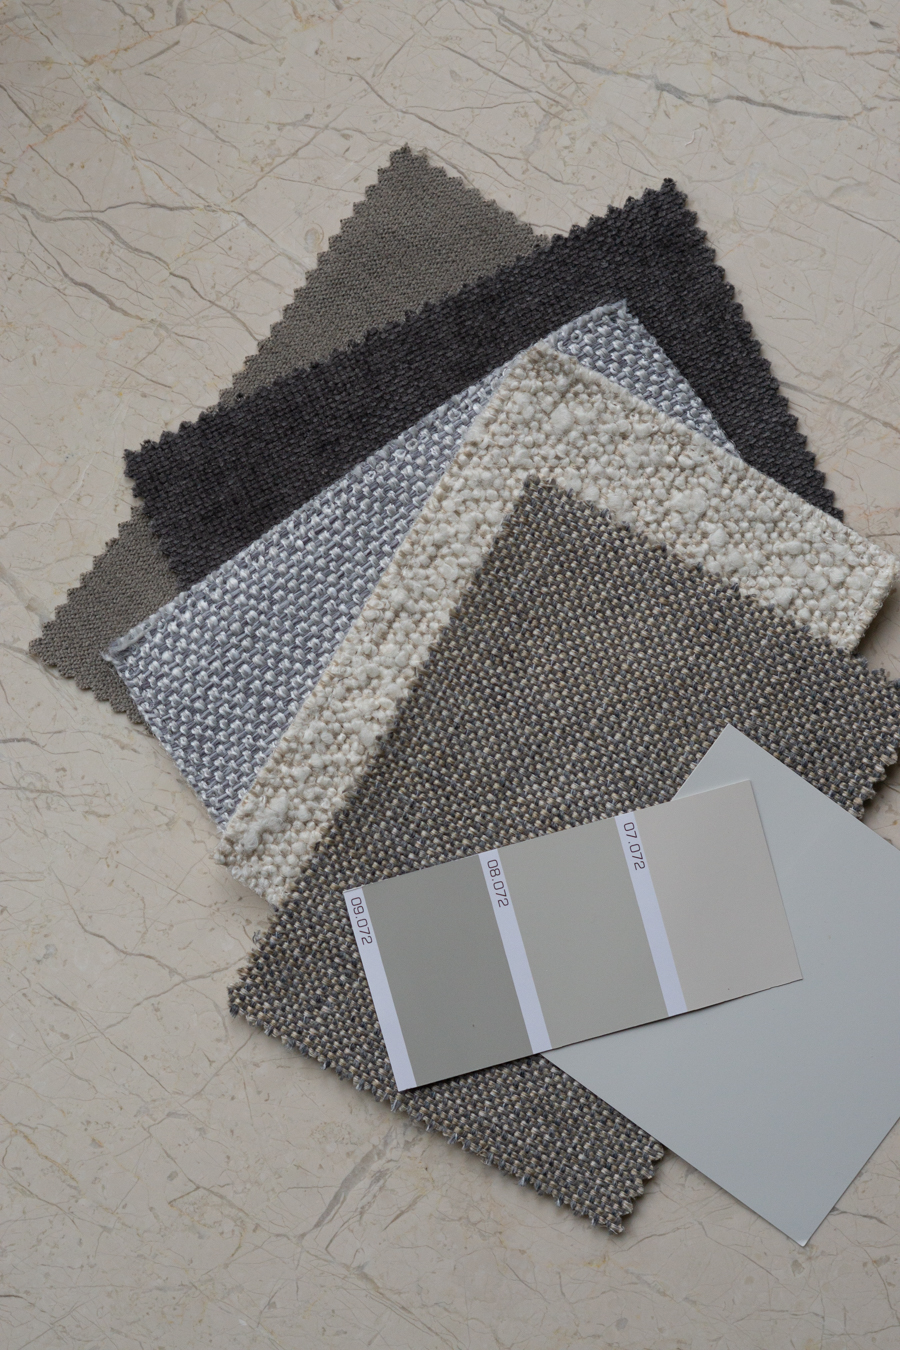 SOFACOMPANY Fabric Samples Interior Design